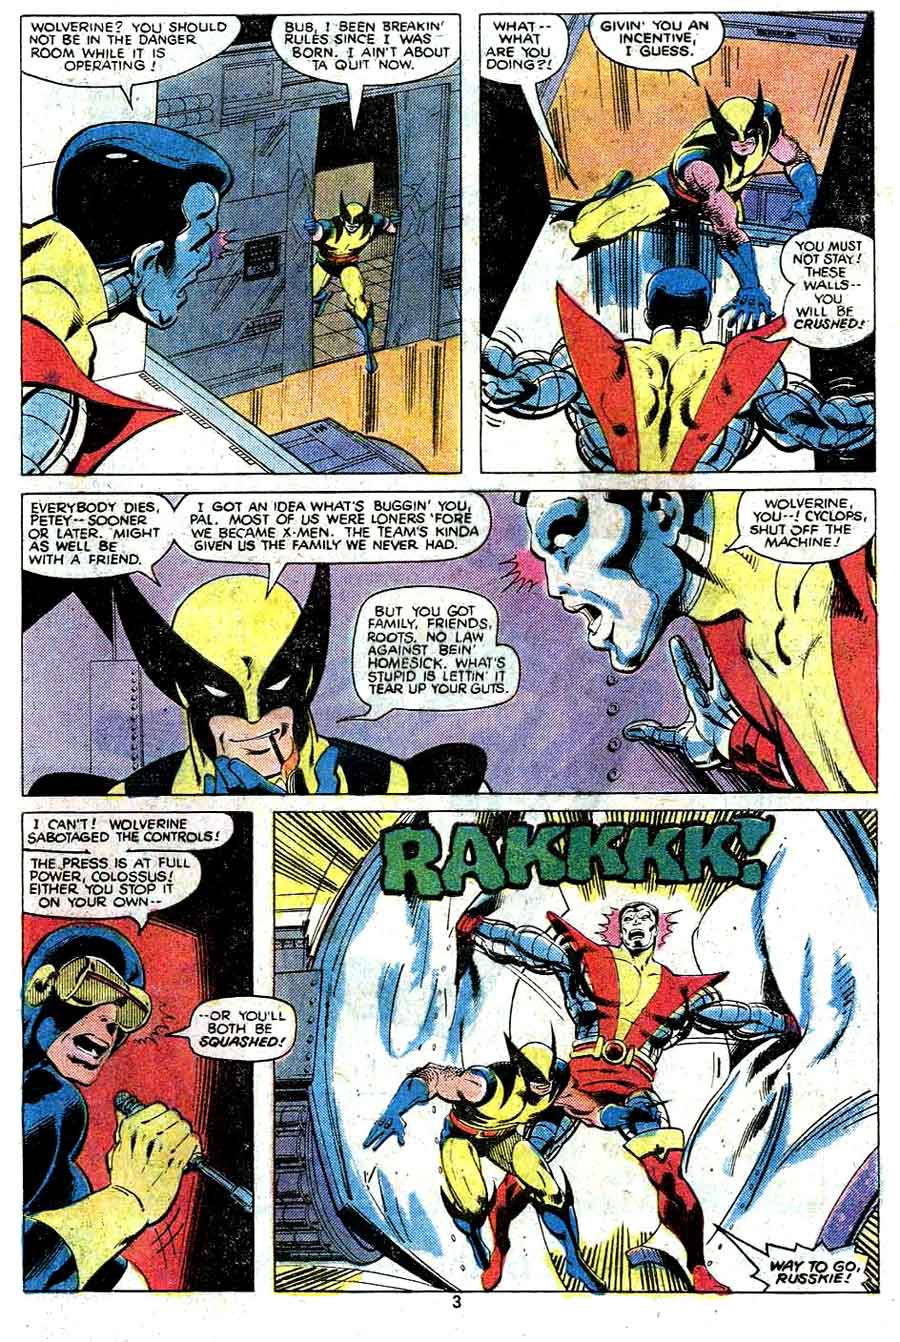 X-men v1 #122 marvel comic book page art by John Byrne